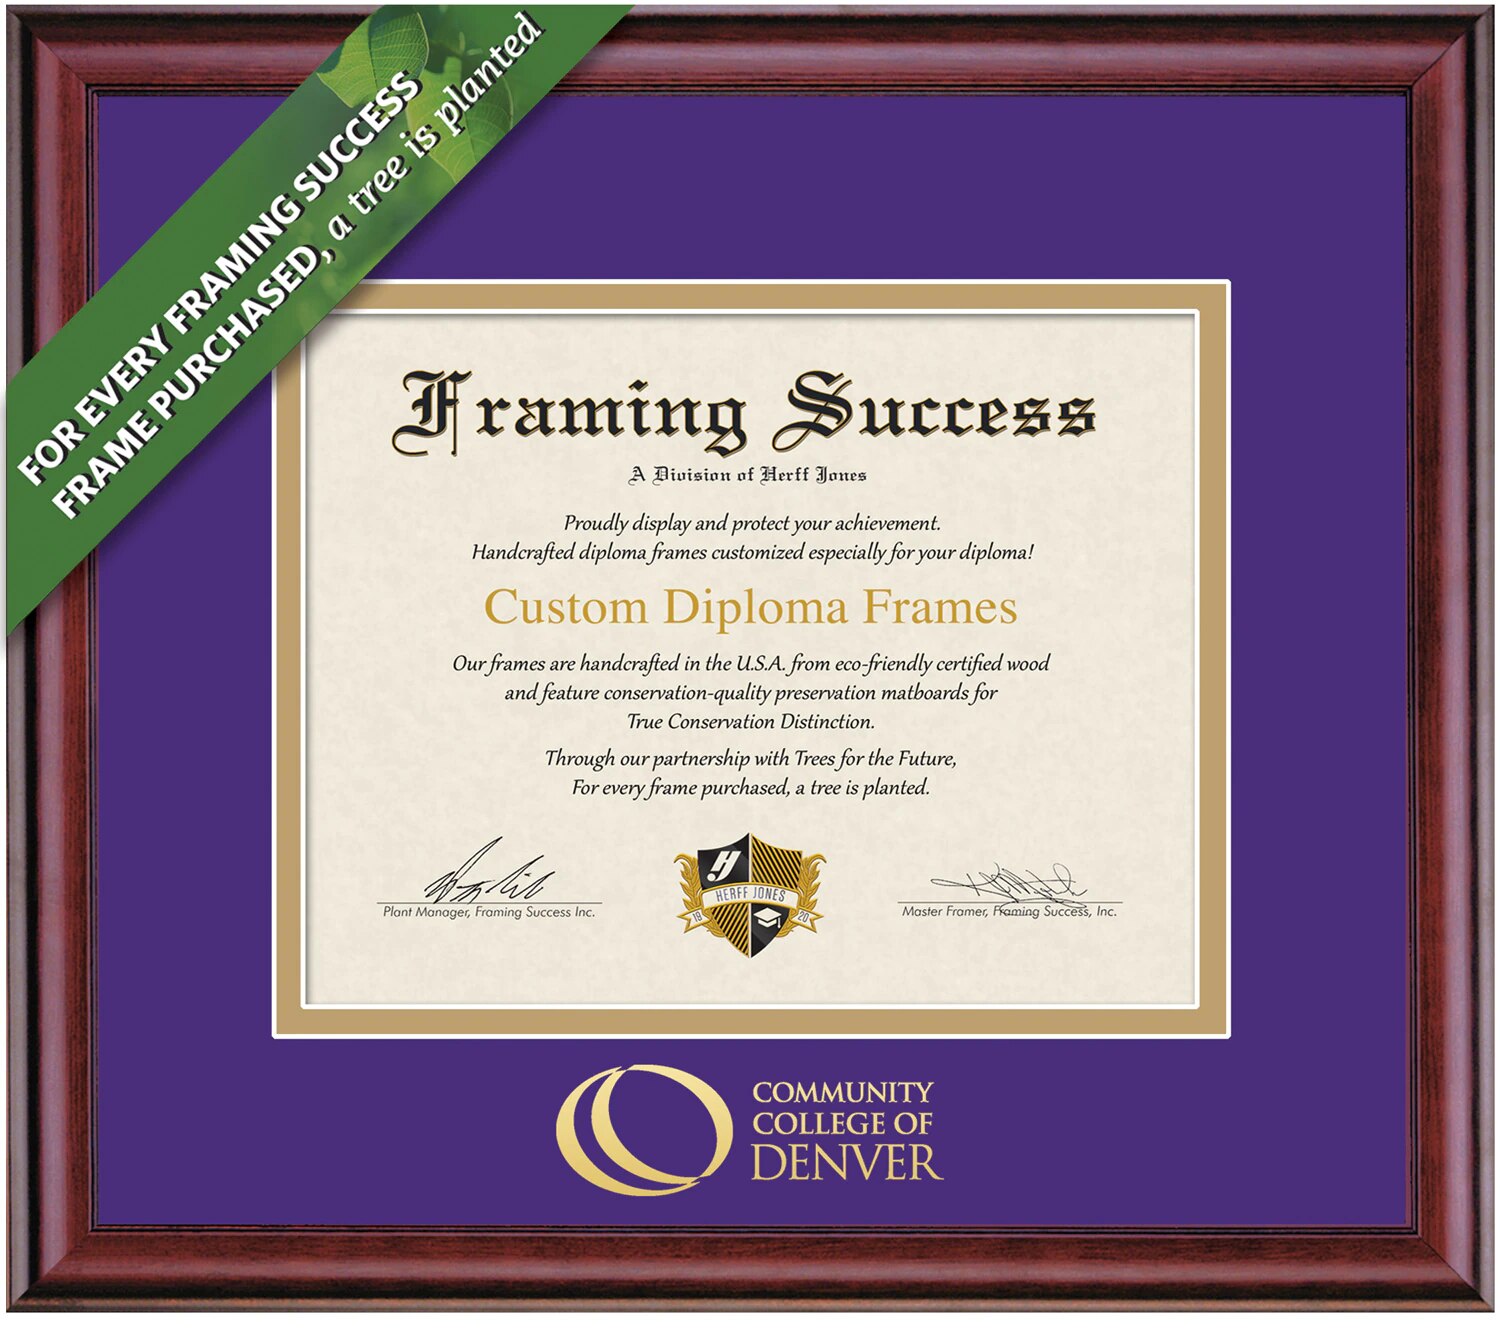 Framing Success 8.5 x 11 Classic Gold Embossed School Logo/Name Associates Diploma Frame